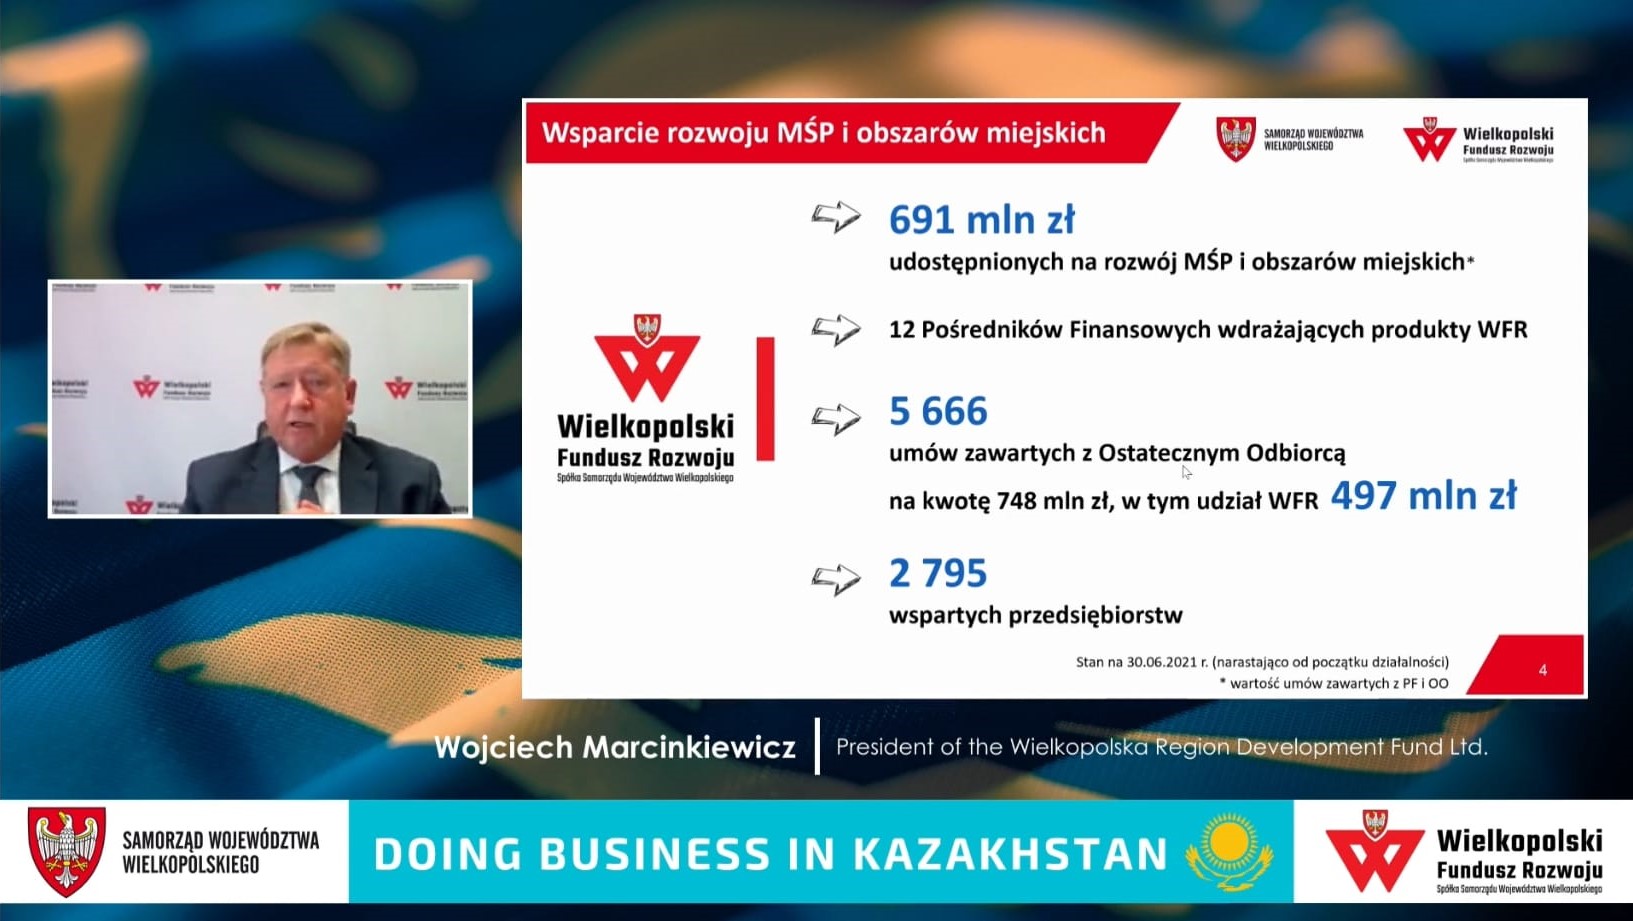 Doing Business in Kazakhstan